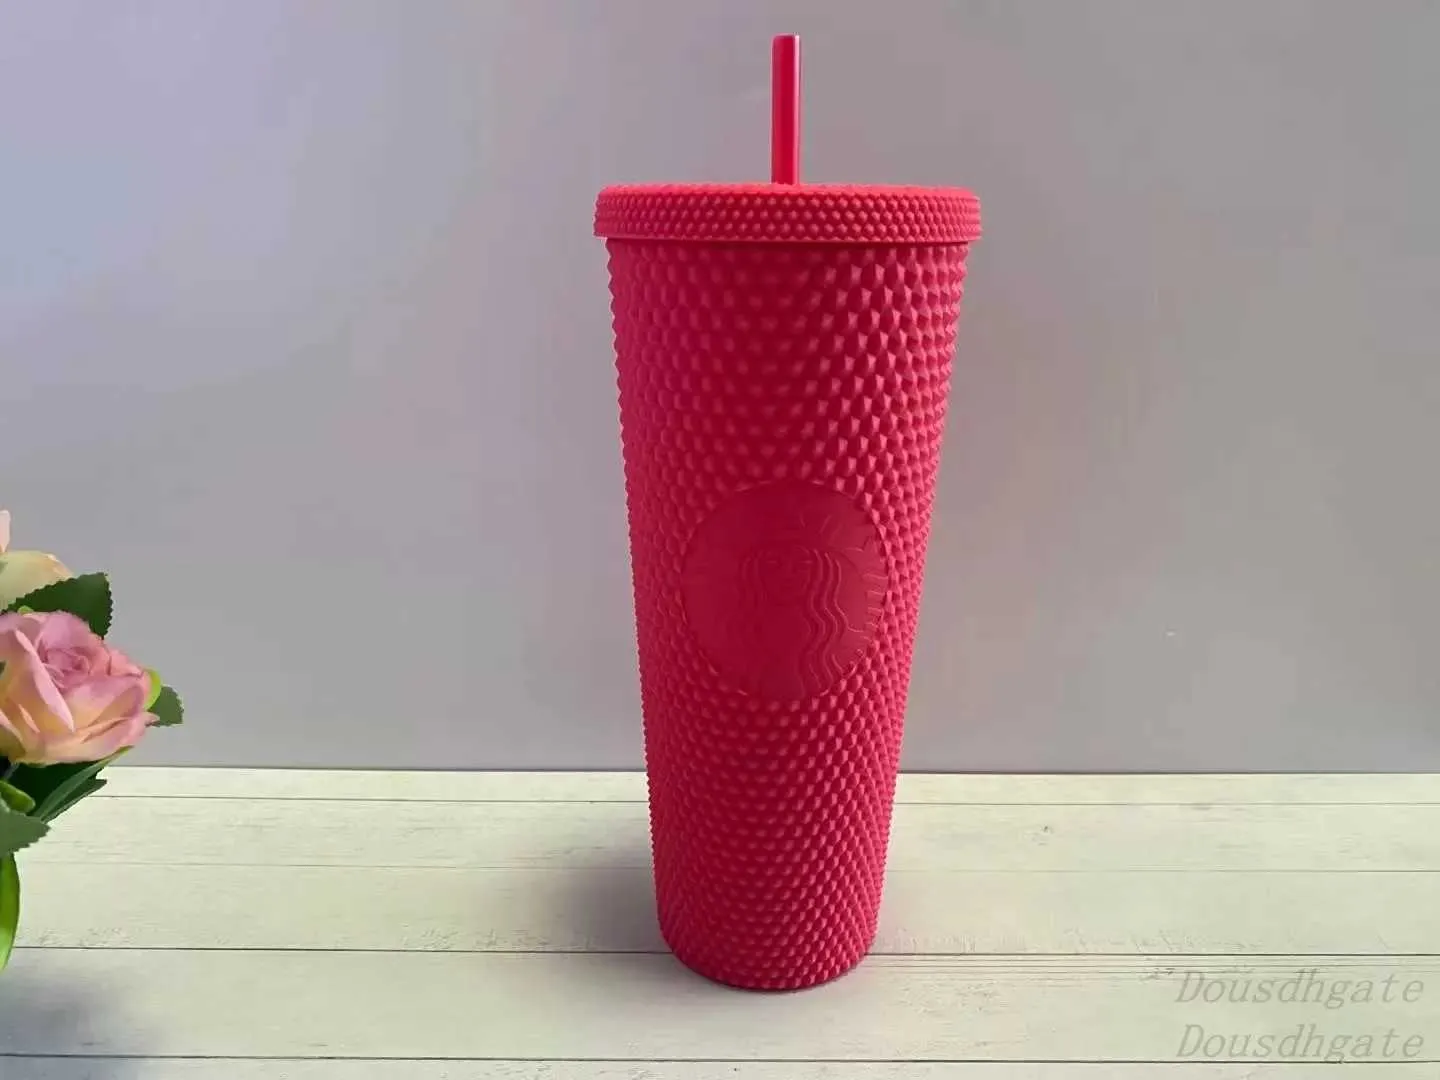 Starbucks sjöjungfru gudinna Studded Cup Tumblers 710 ml Carbie Pink Matte Black Plastic Mugs With Straw248r